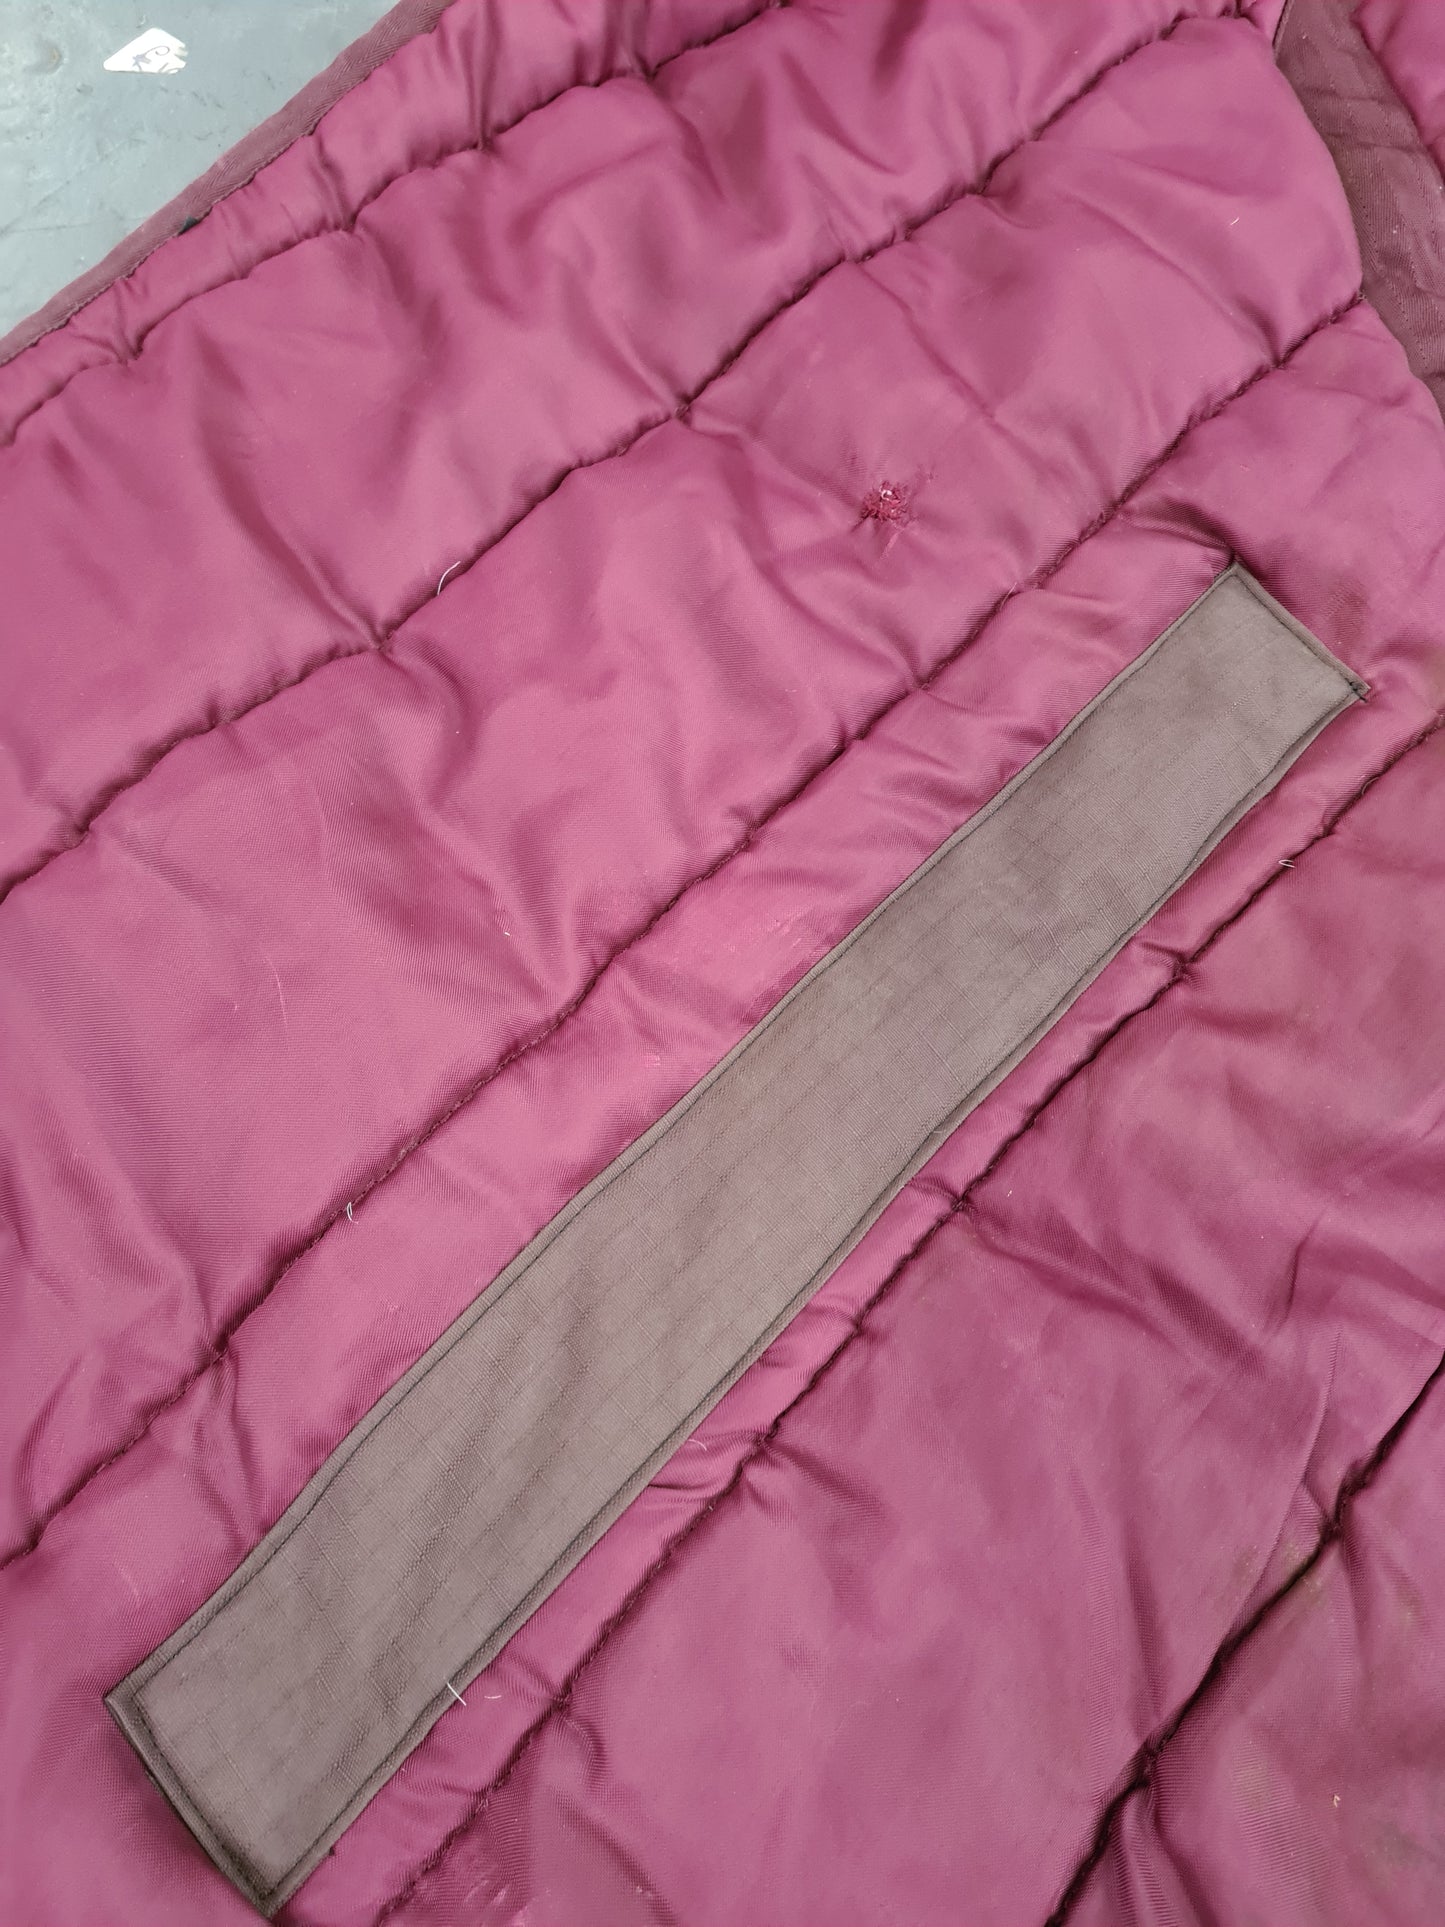 Masta stable rug, 6'0, light weight, burgundy FREE POSTAGE 🟢